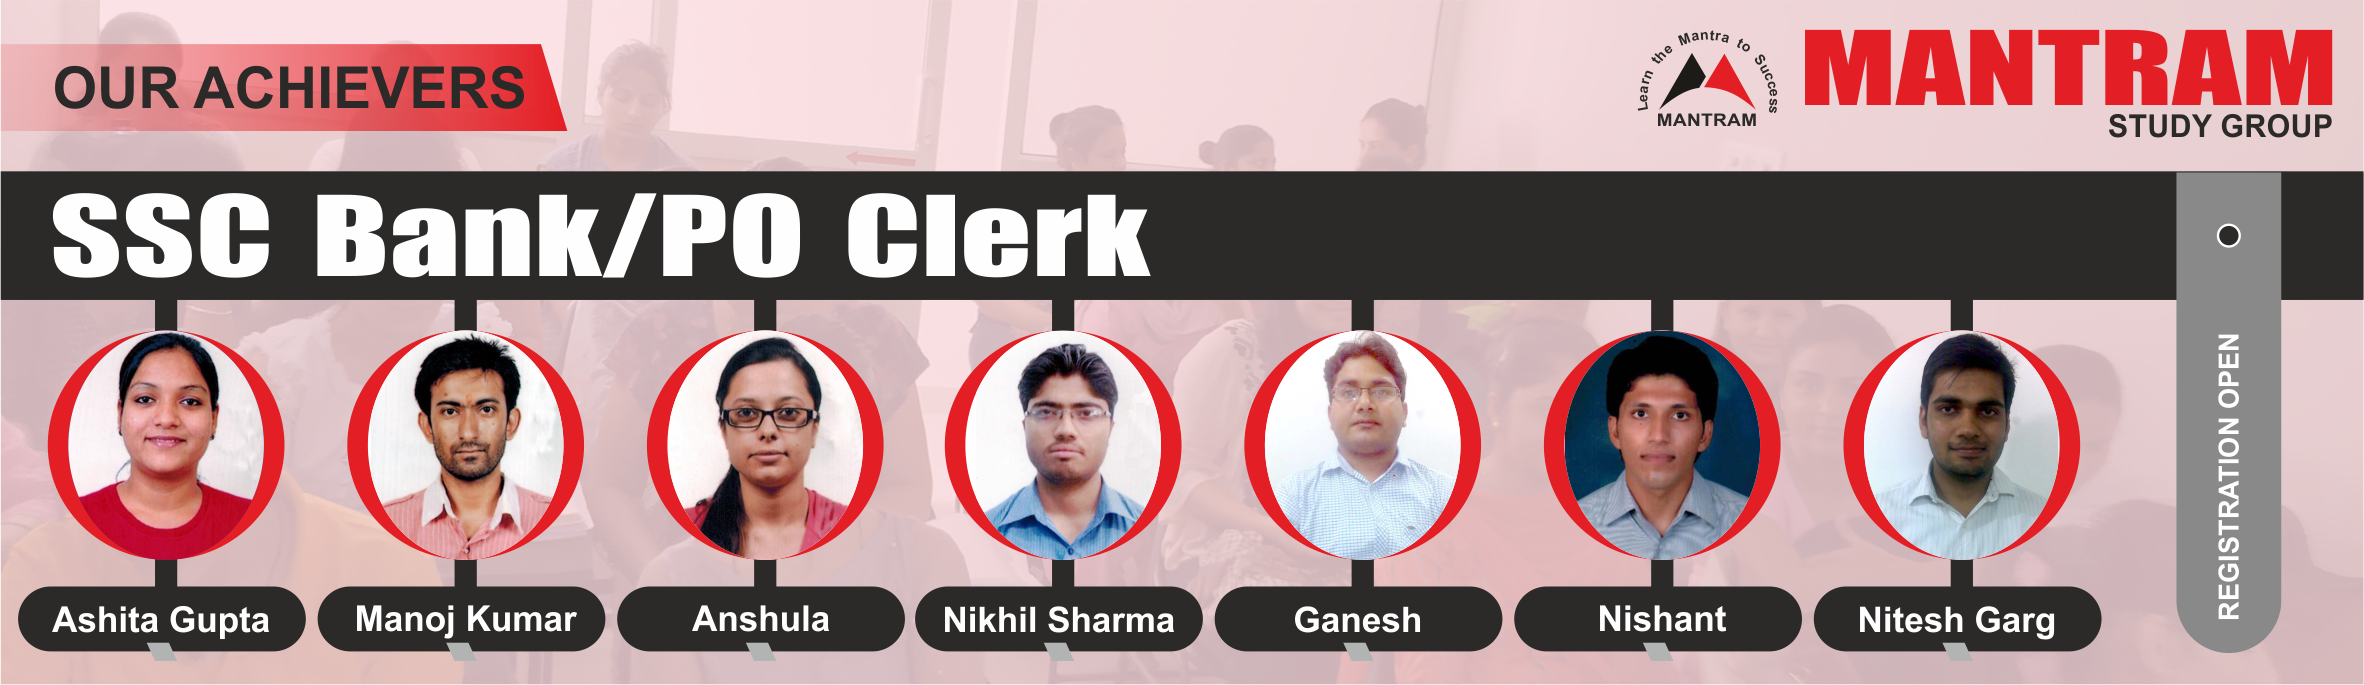 ssc bank po clerk recruitment coaching in Chandigarh